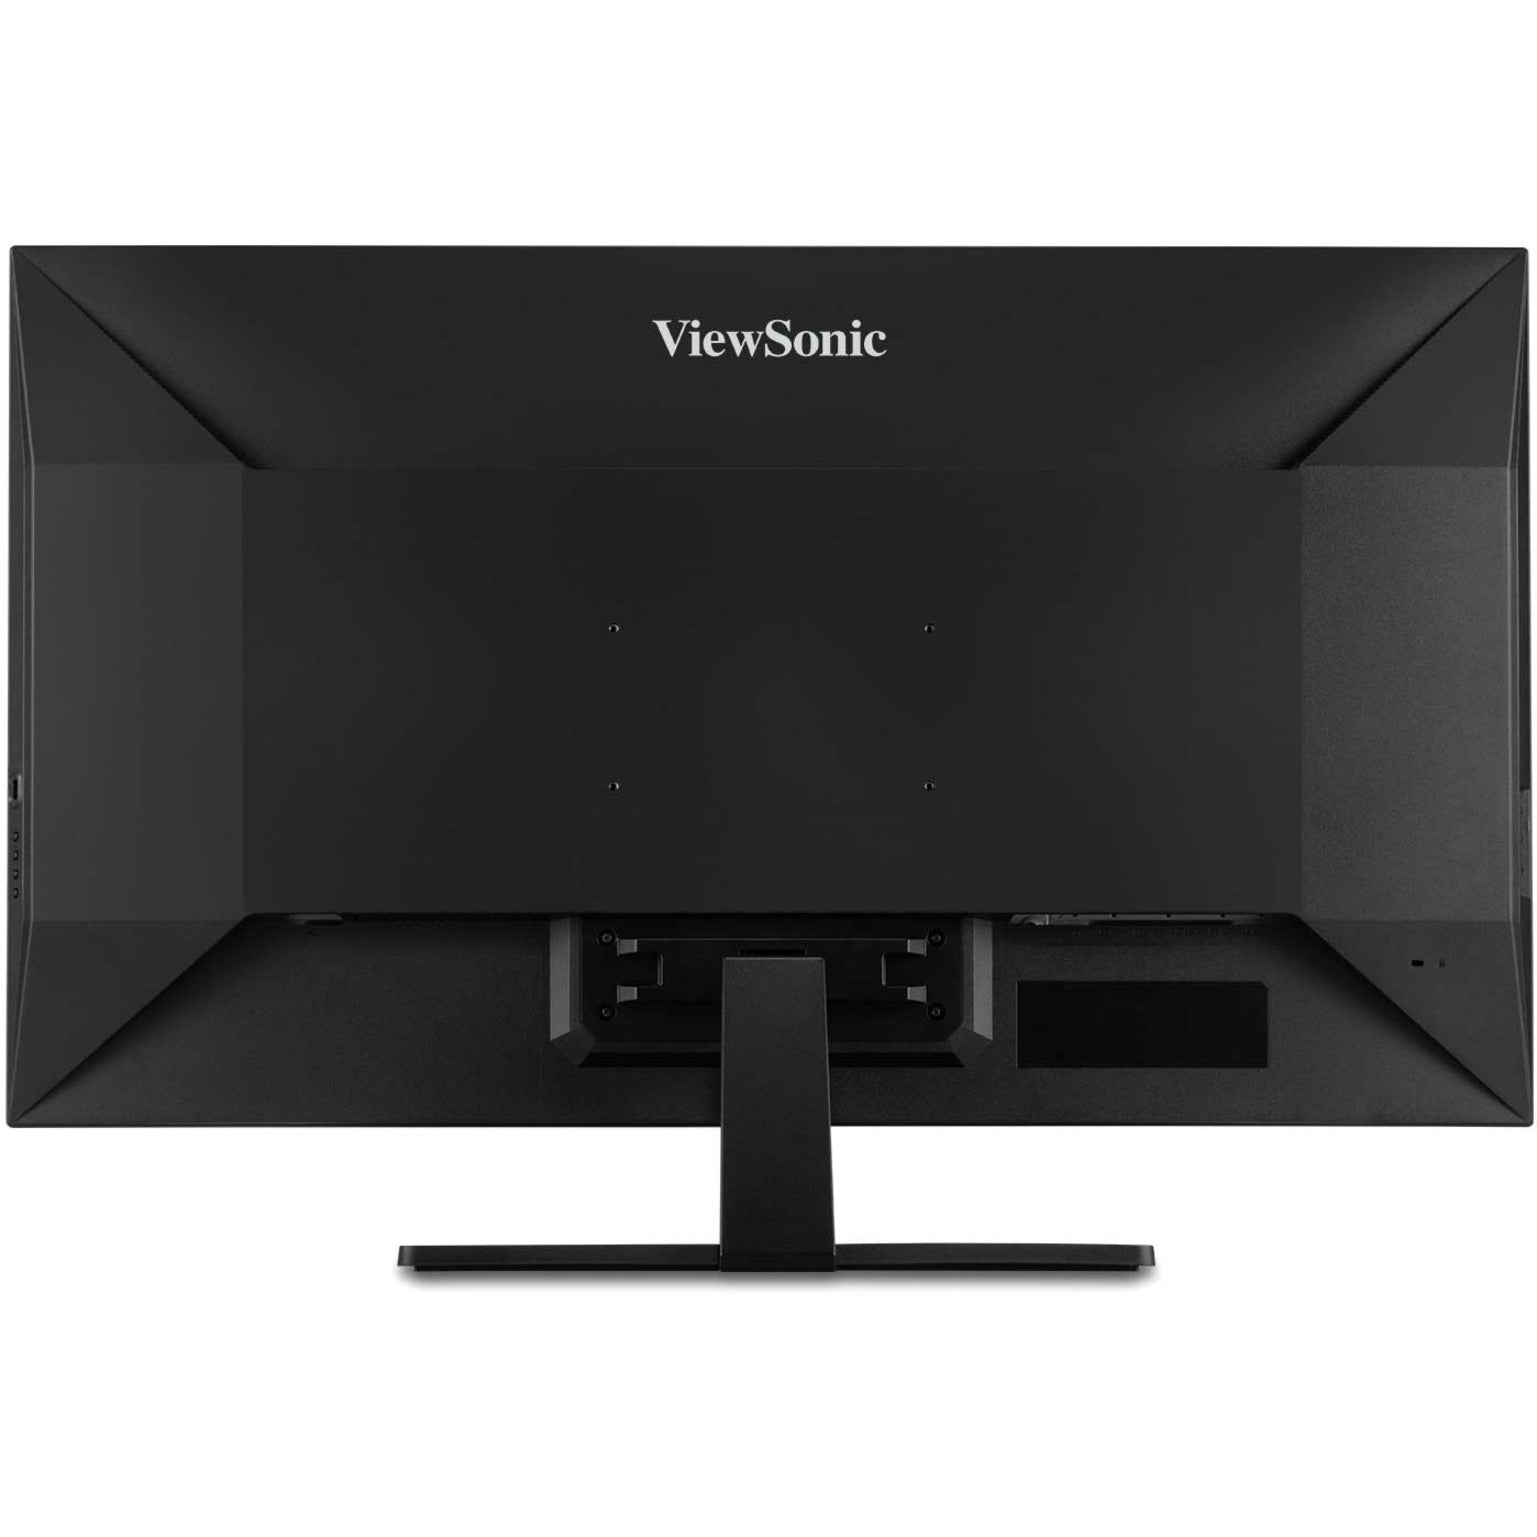 ViewSonic VX4381-4K 43" 4K Ultra HD MVA Monitor, HDMI and DisplayPort, 3840 x 2160 Resolution